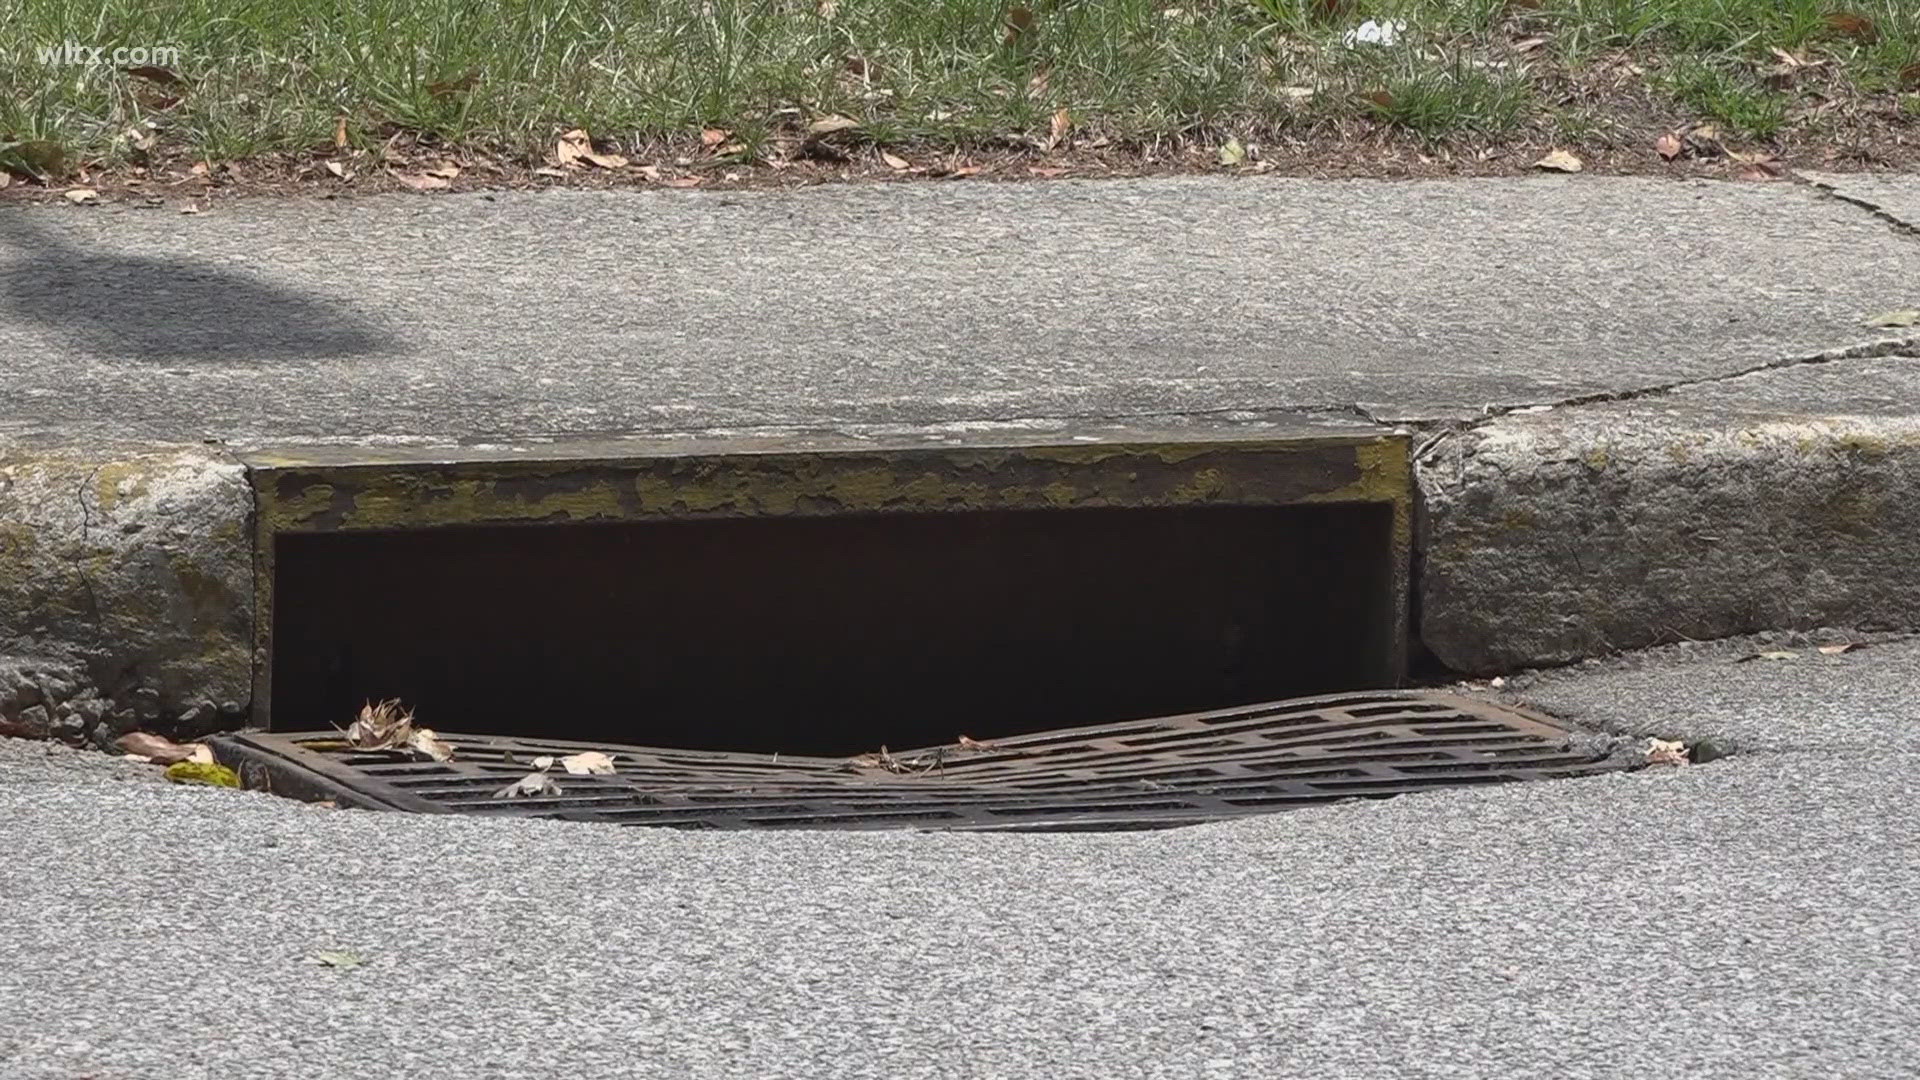 The state gave $5.2M to improve storm drains in Orangeburg.